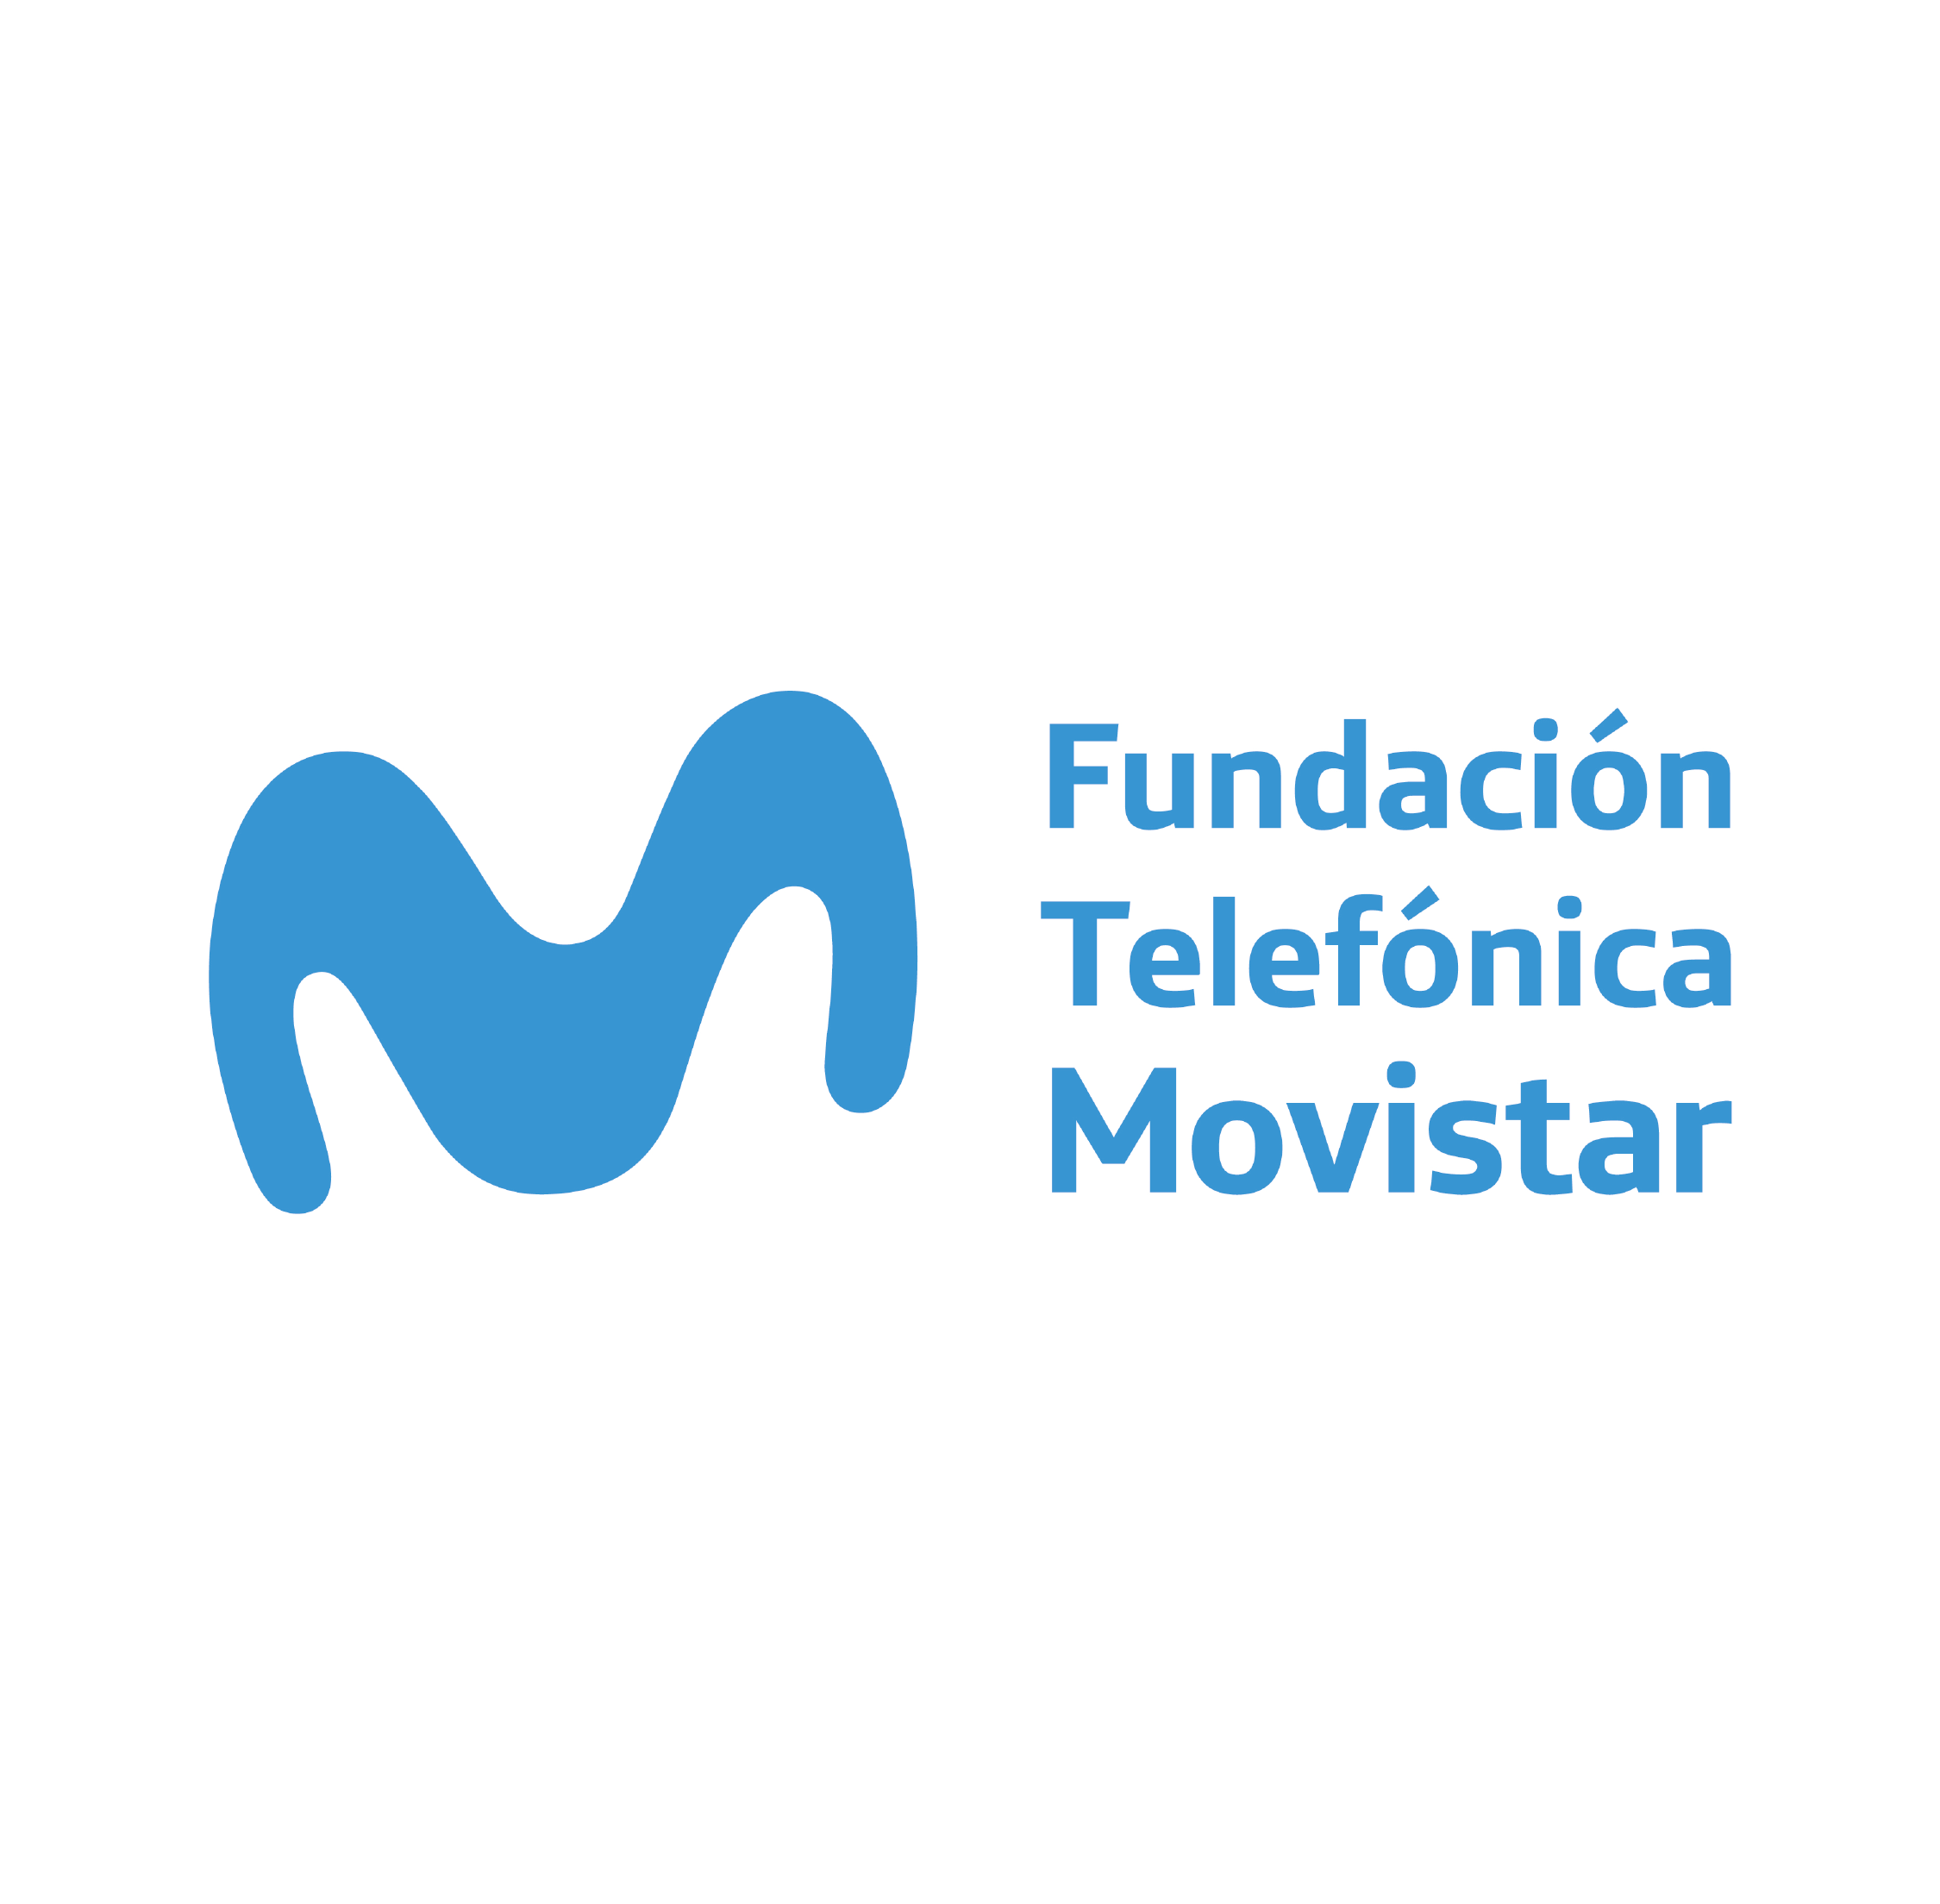 Fundacion Telefonica Movistar